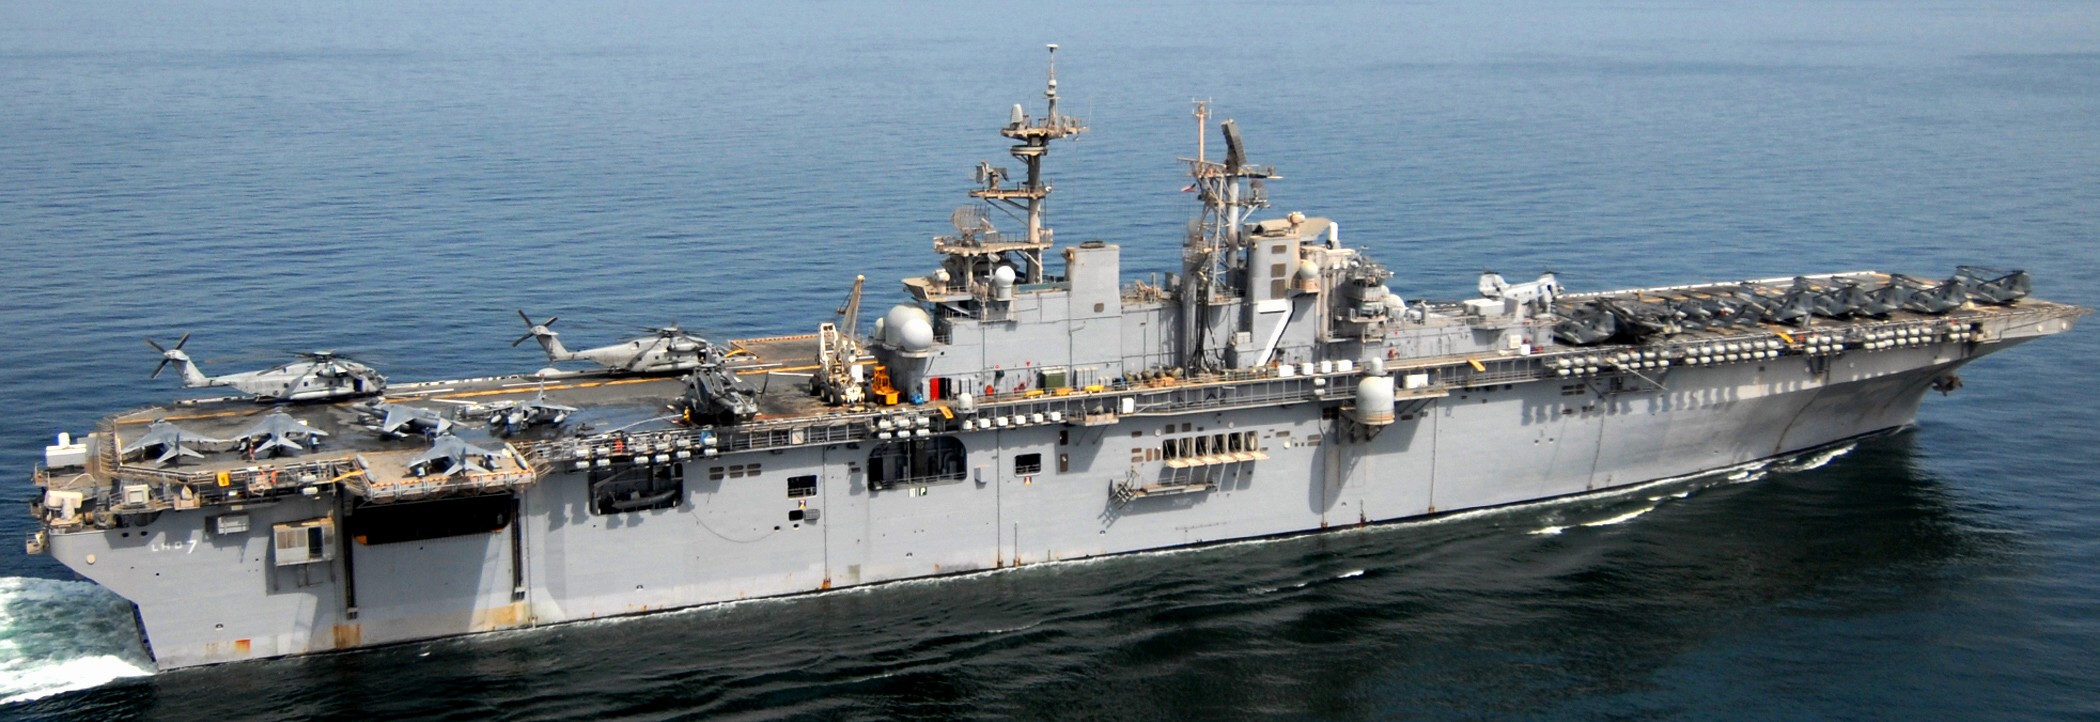 lhd-7 uss iwo jima wasp class amphibious assault ship dock landing helicopter us navy hmm-264 marines gulf oman 66